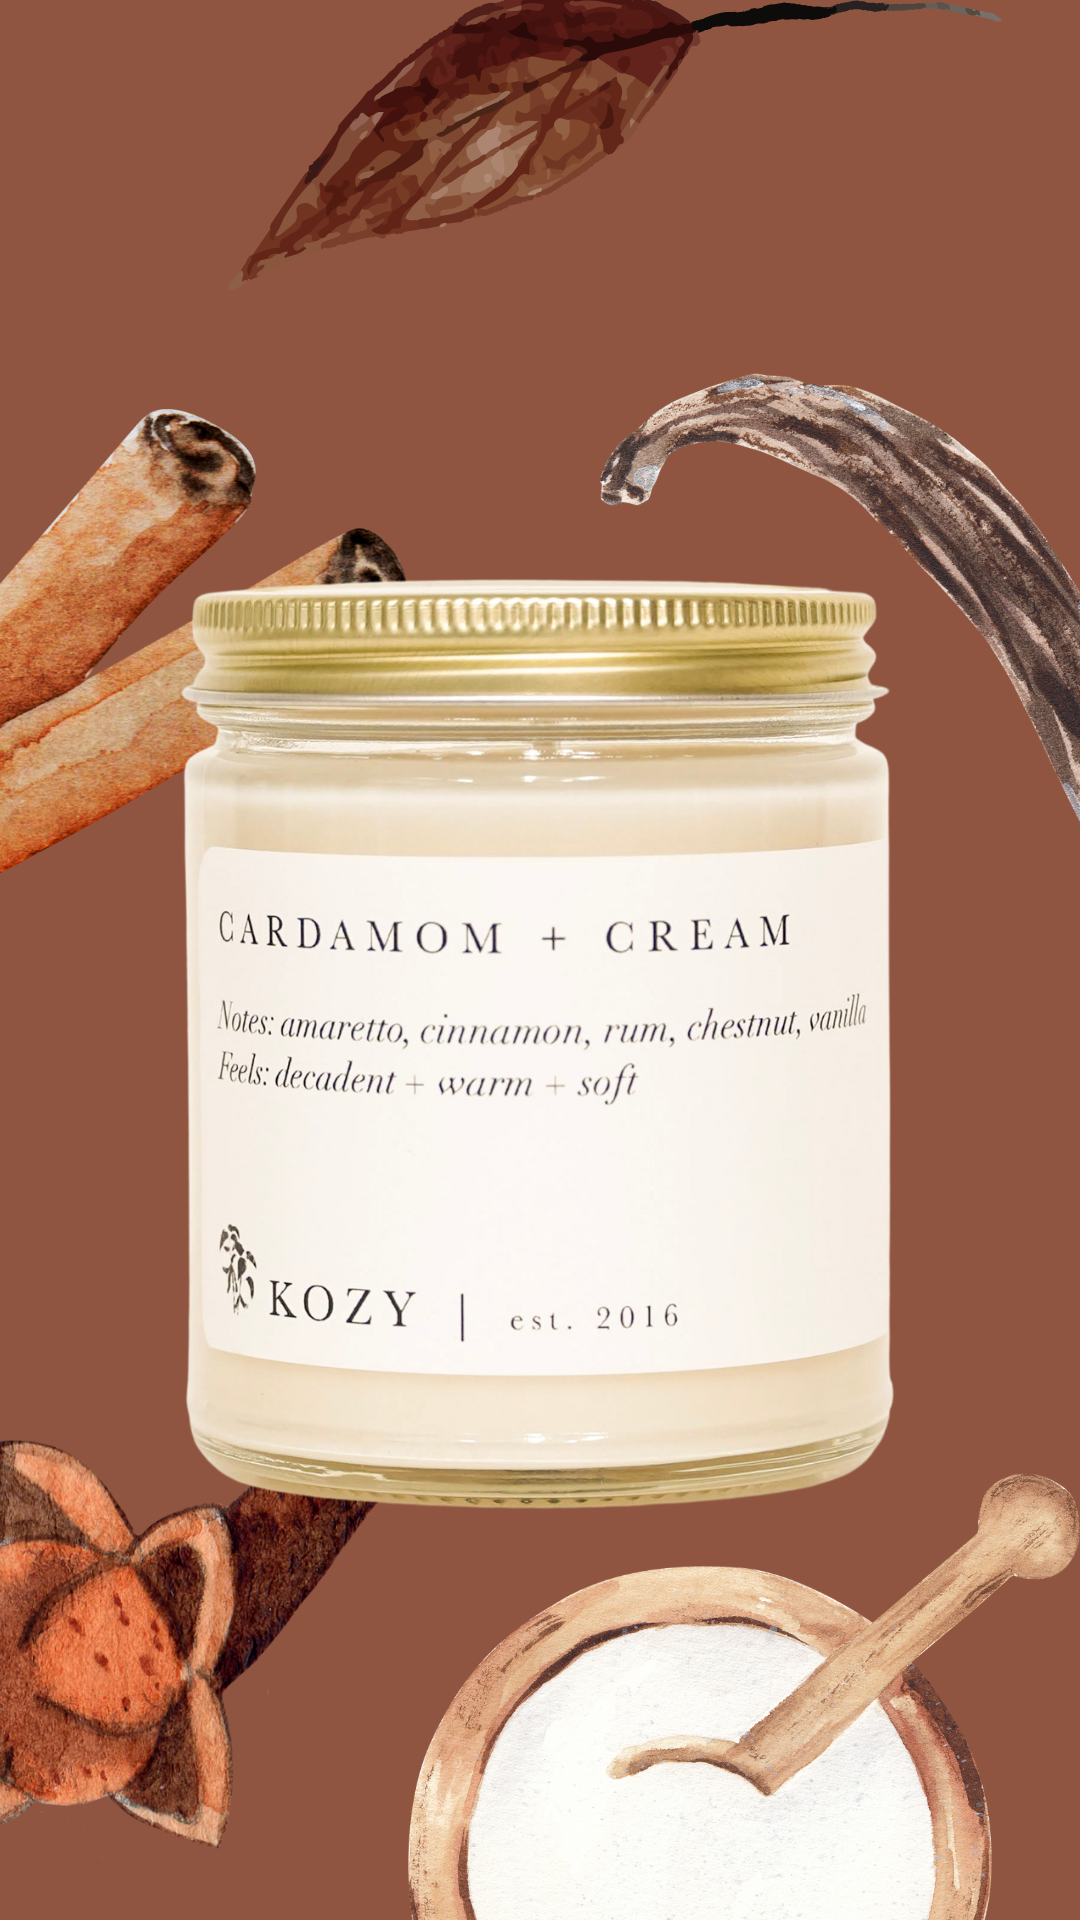 Cardamom + Cream